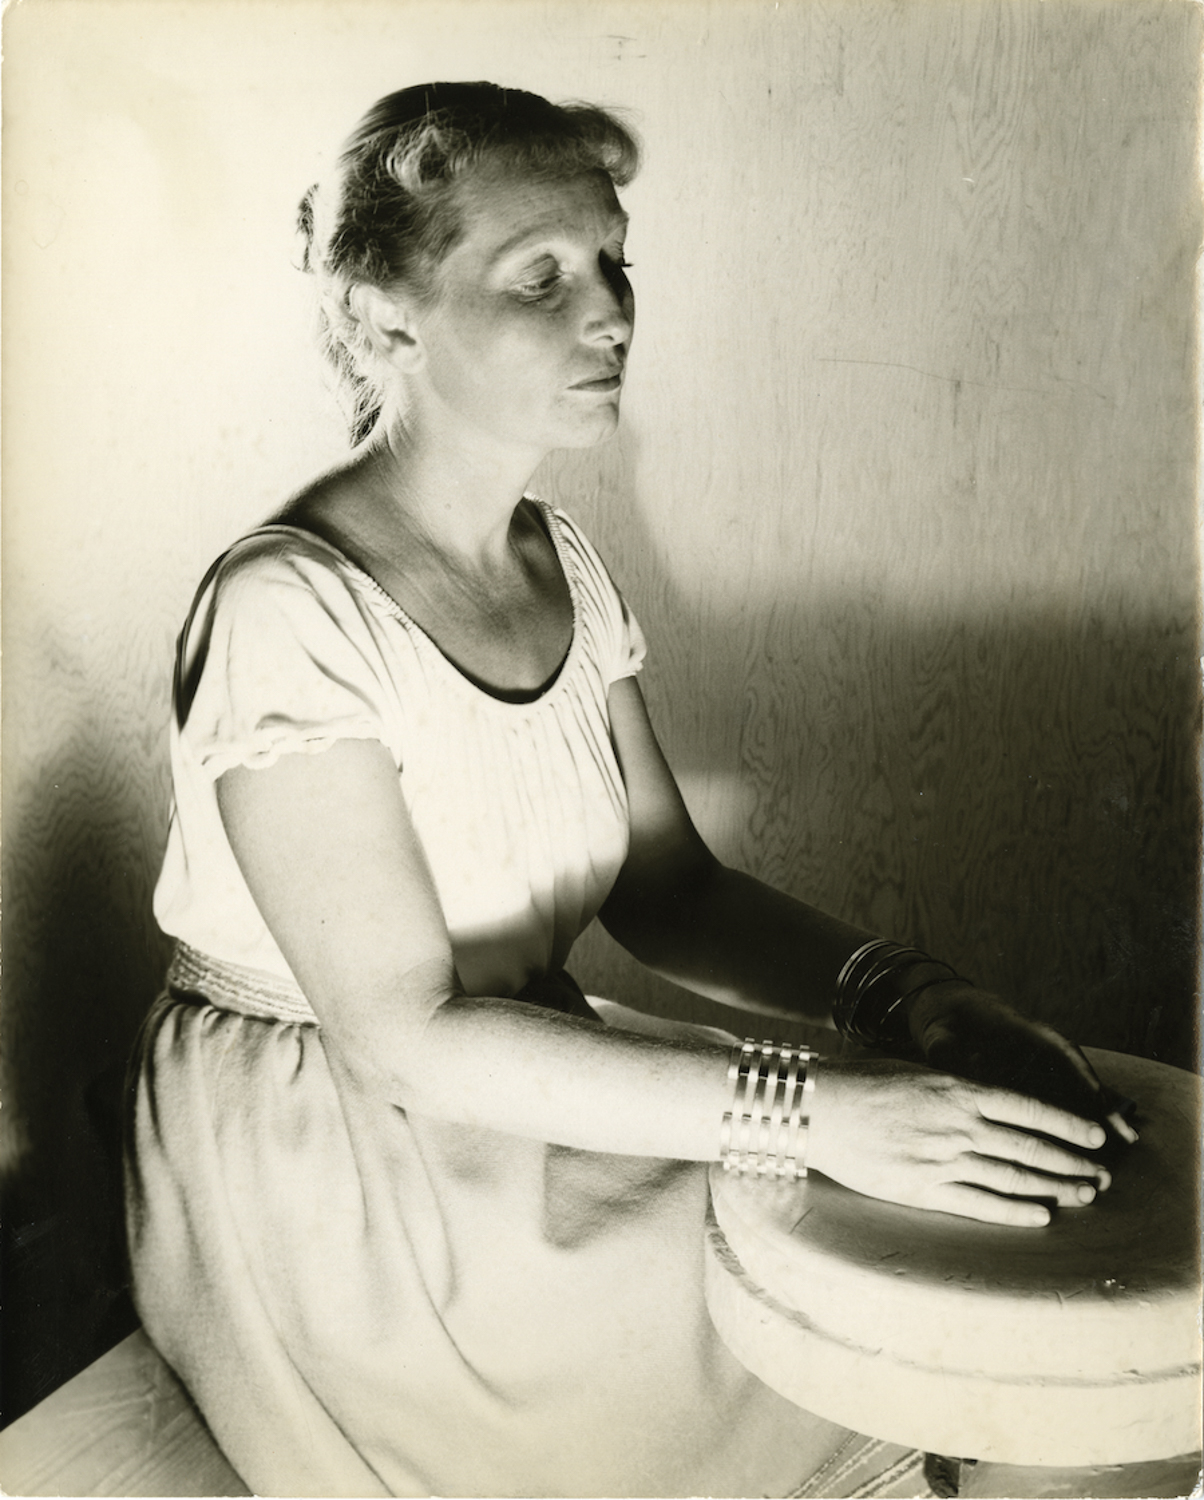 Black and white portrait of Edith Heath of Heath Ceramics at the pottery wheel.